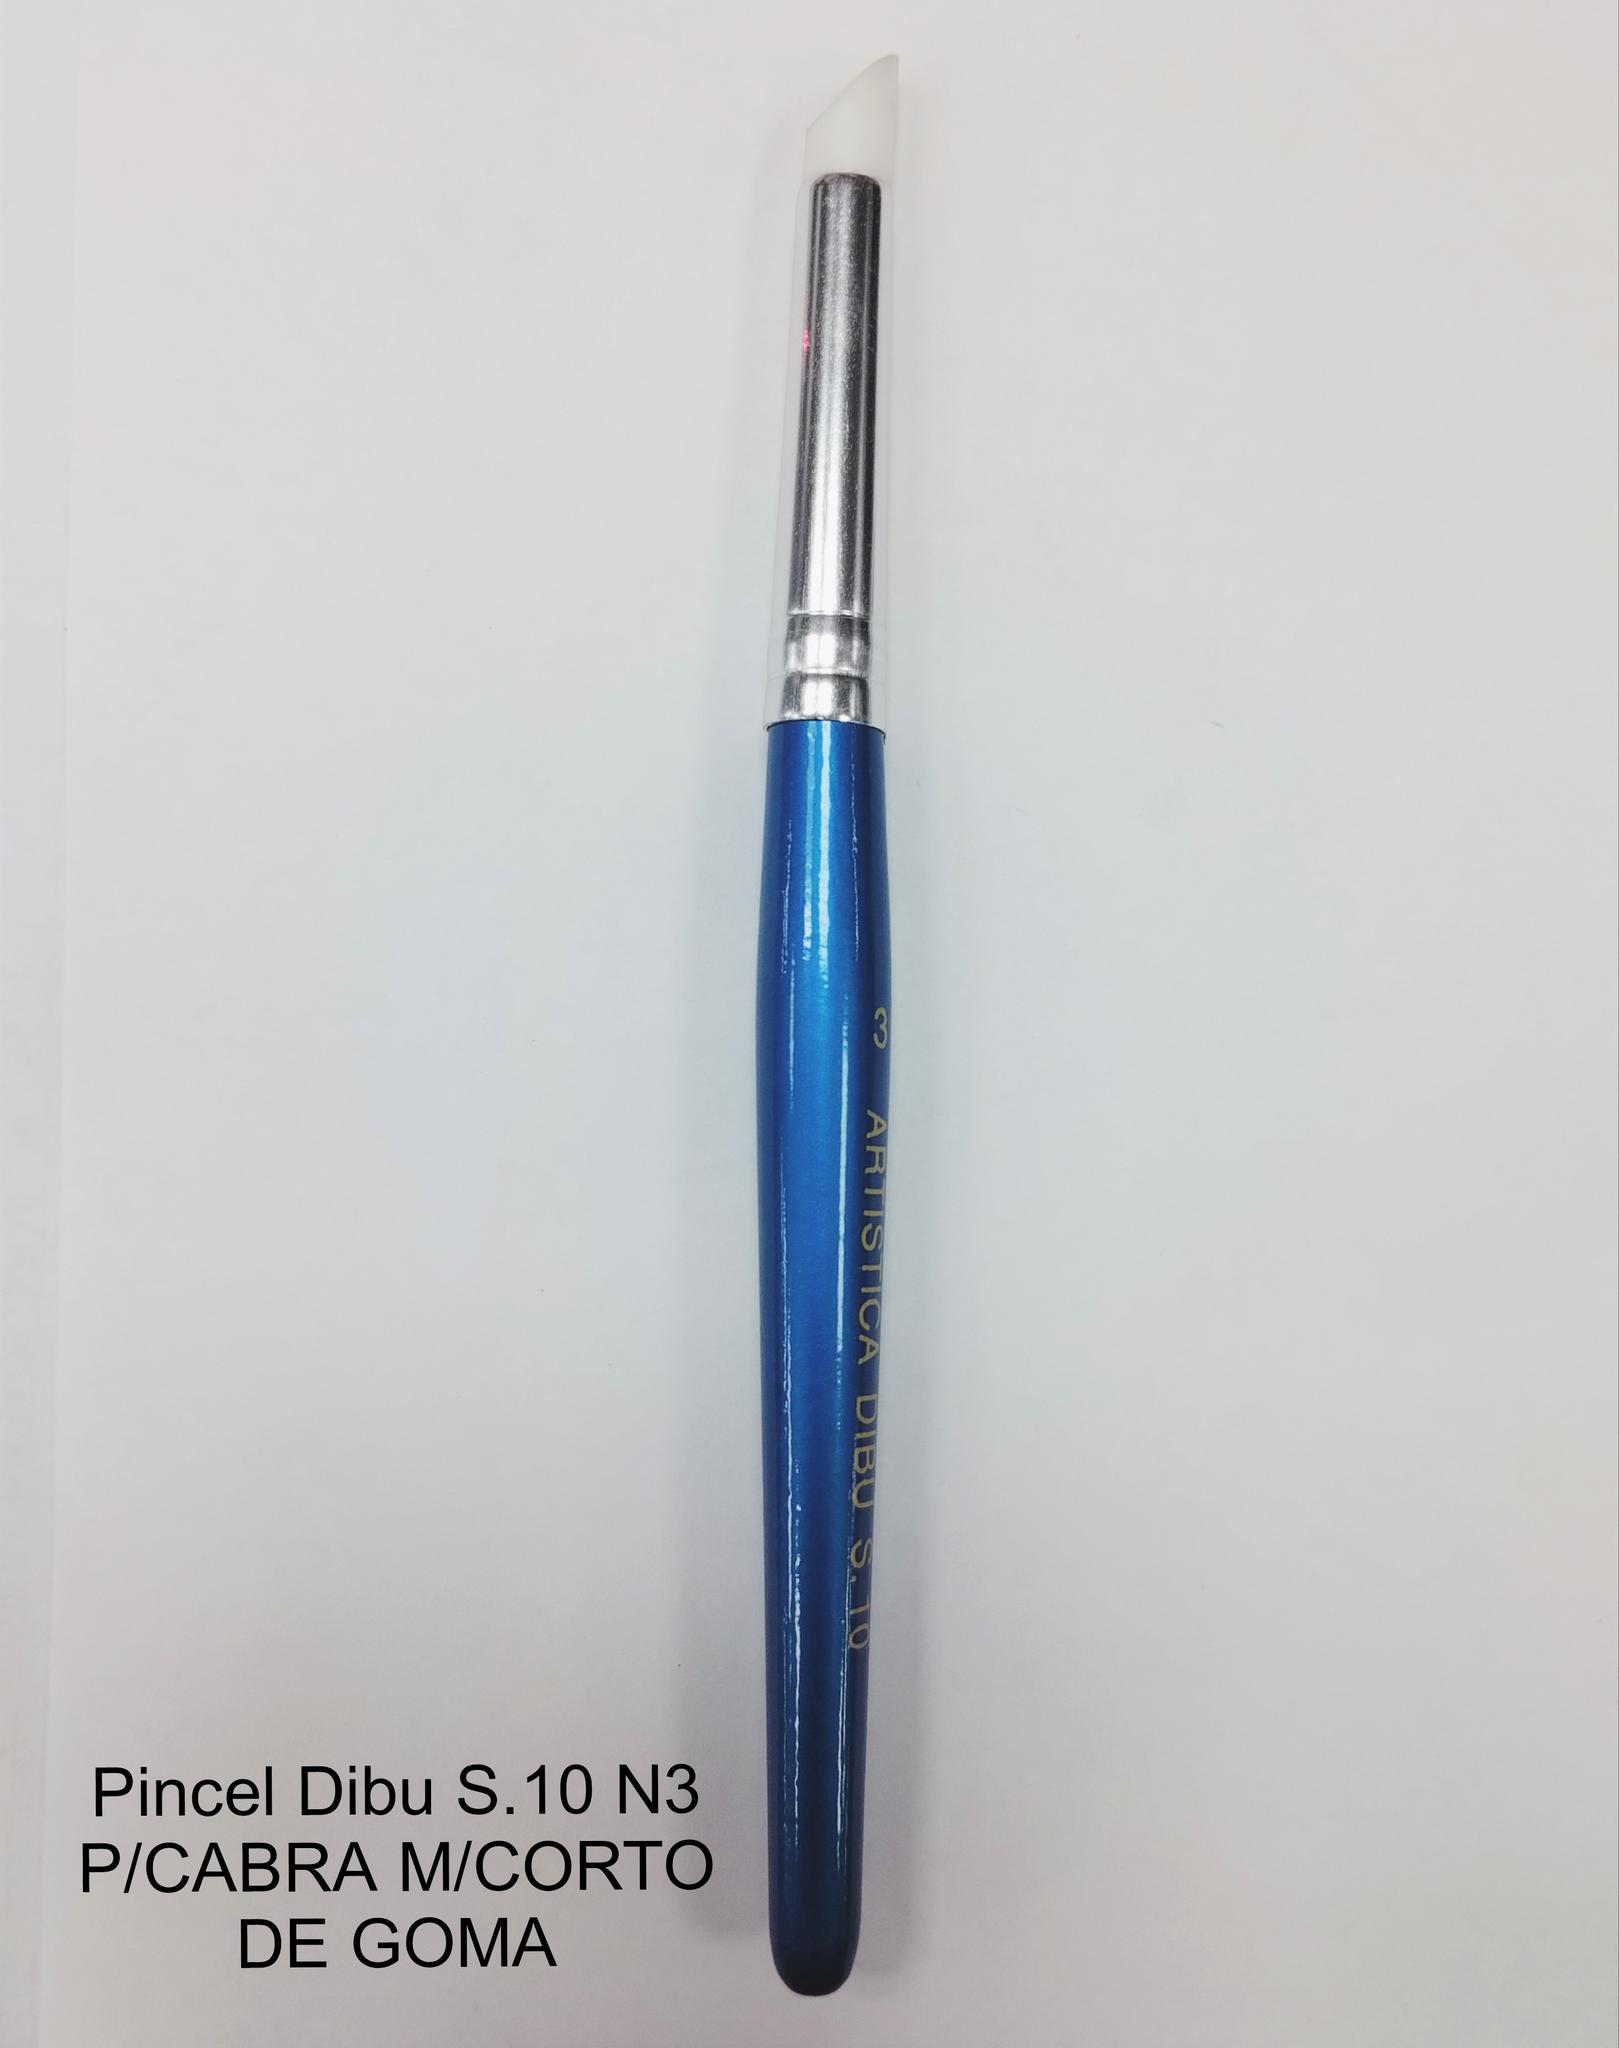 PINCEL DIBU S.10 Nº3 P/CABRA M/CORTO DE GOMA-